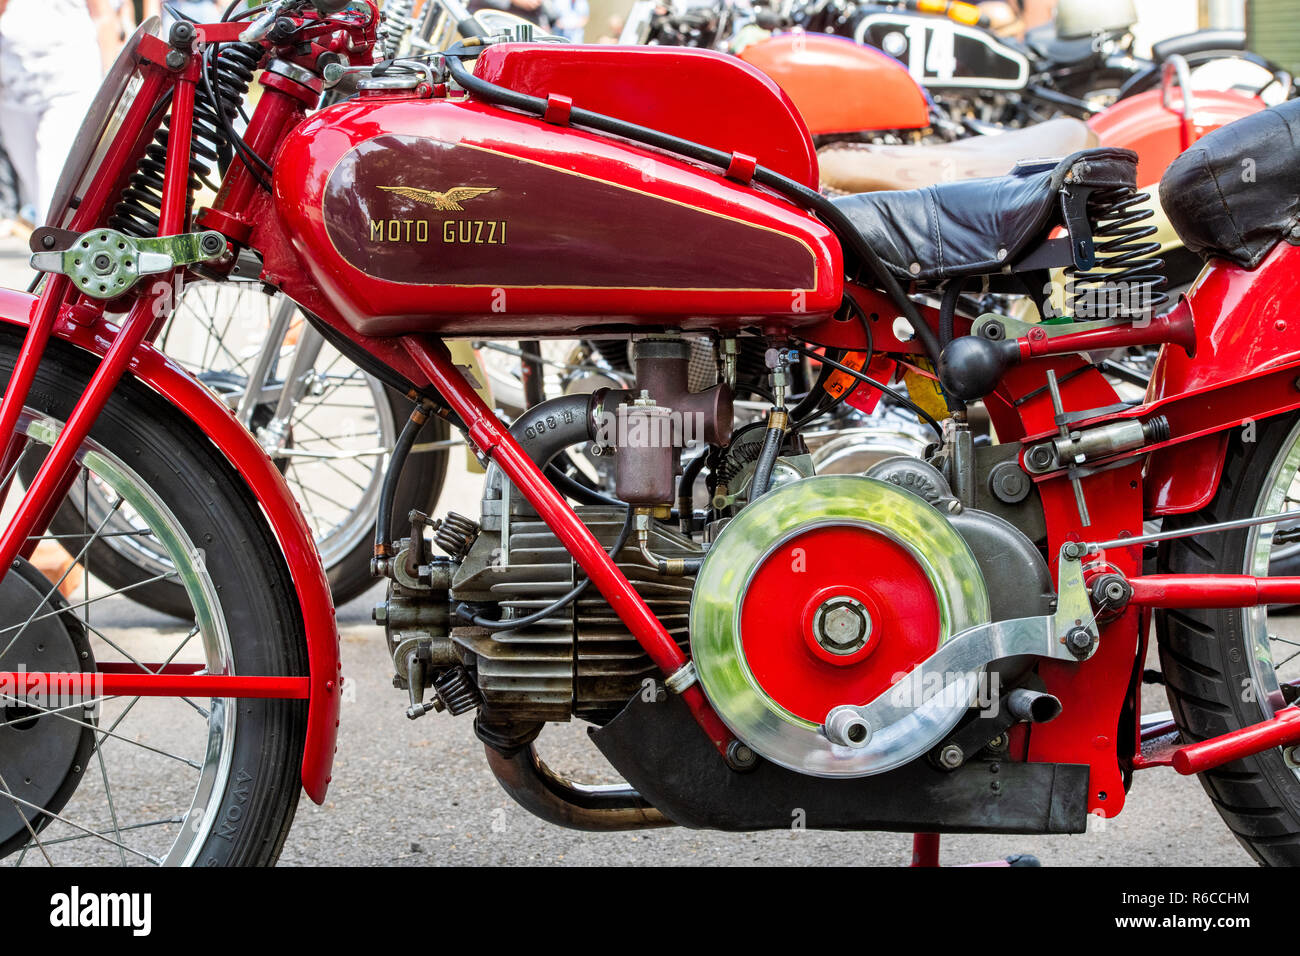 Moto guzzi motorbike hi-res stock photography and images - Alamy